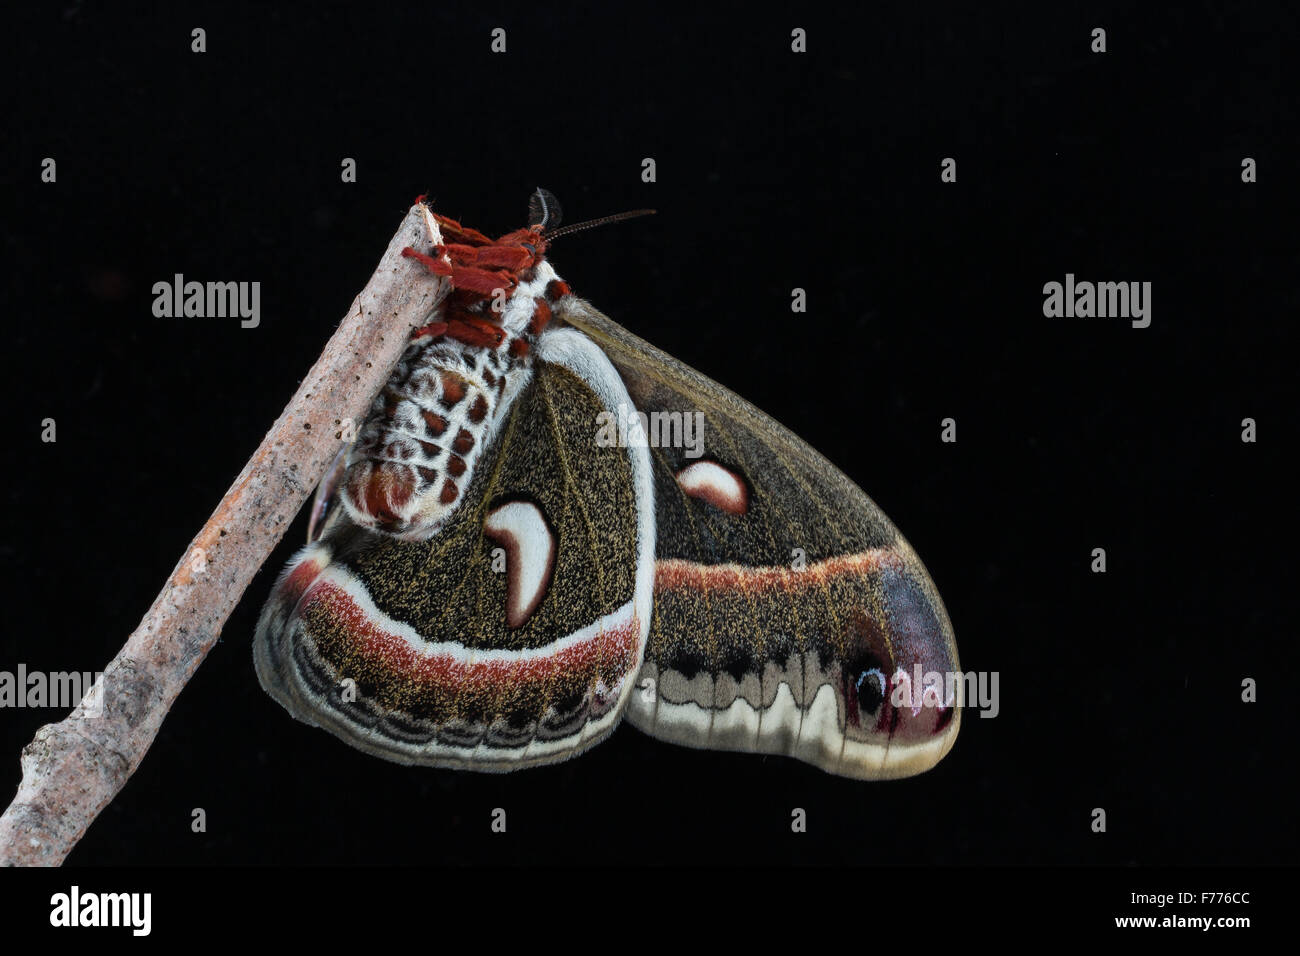 Cecropia silkmoth, Hyalophora cecropia, ventral side on black background Stock Photo